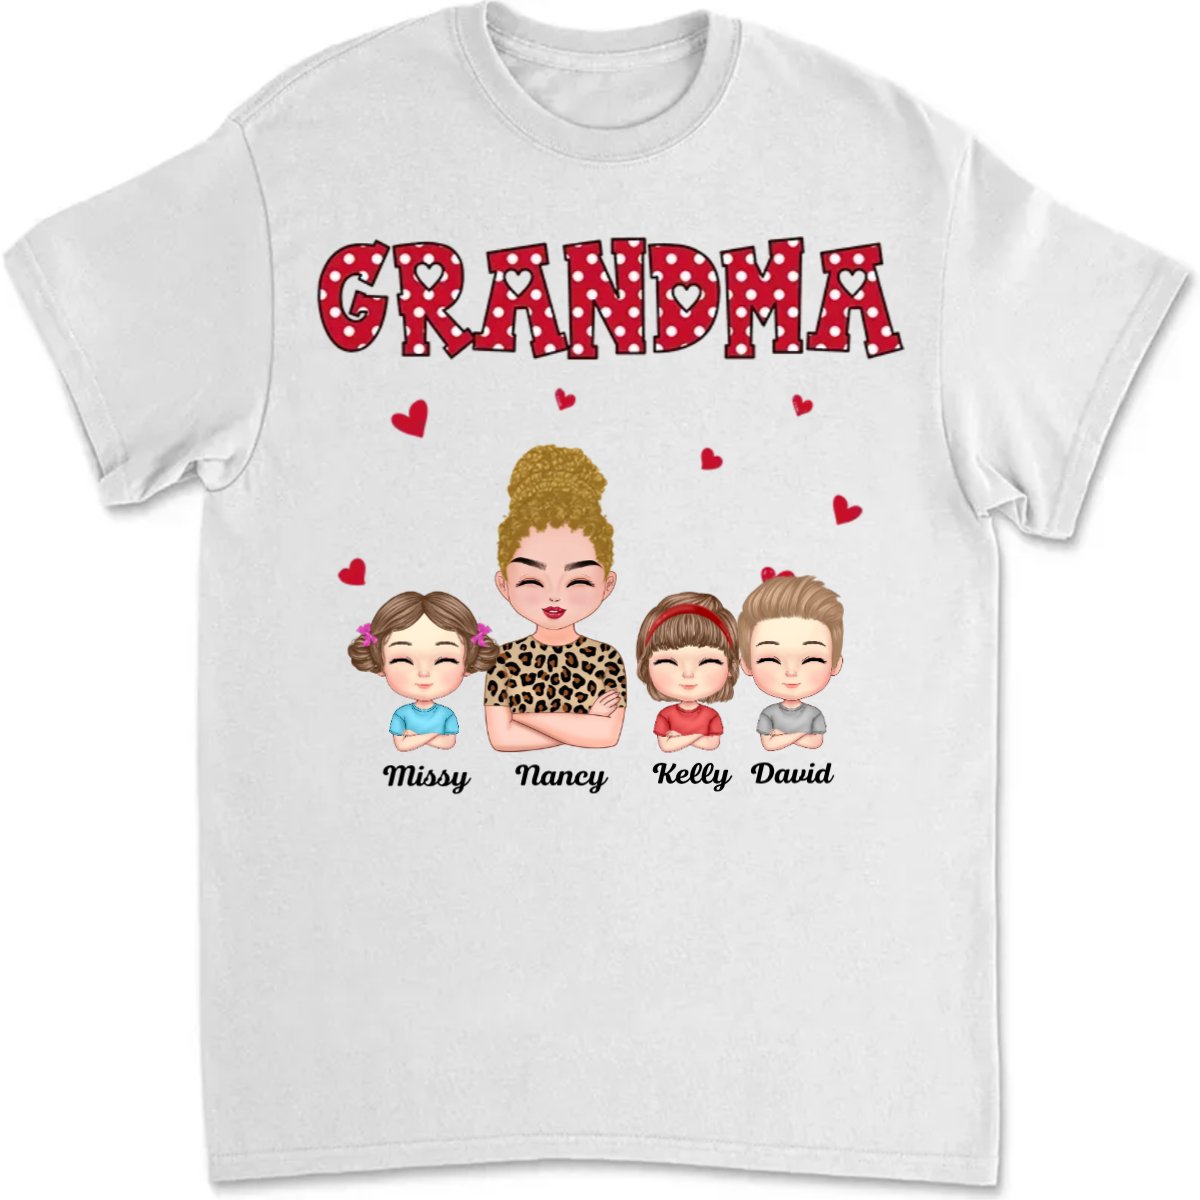 Grandma - Polka Dot Pattern Grandma And Grandkids Gift For Grandma - Personalized T - shirt - The Next Custom Gift